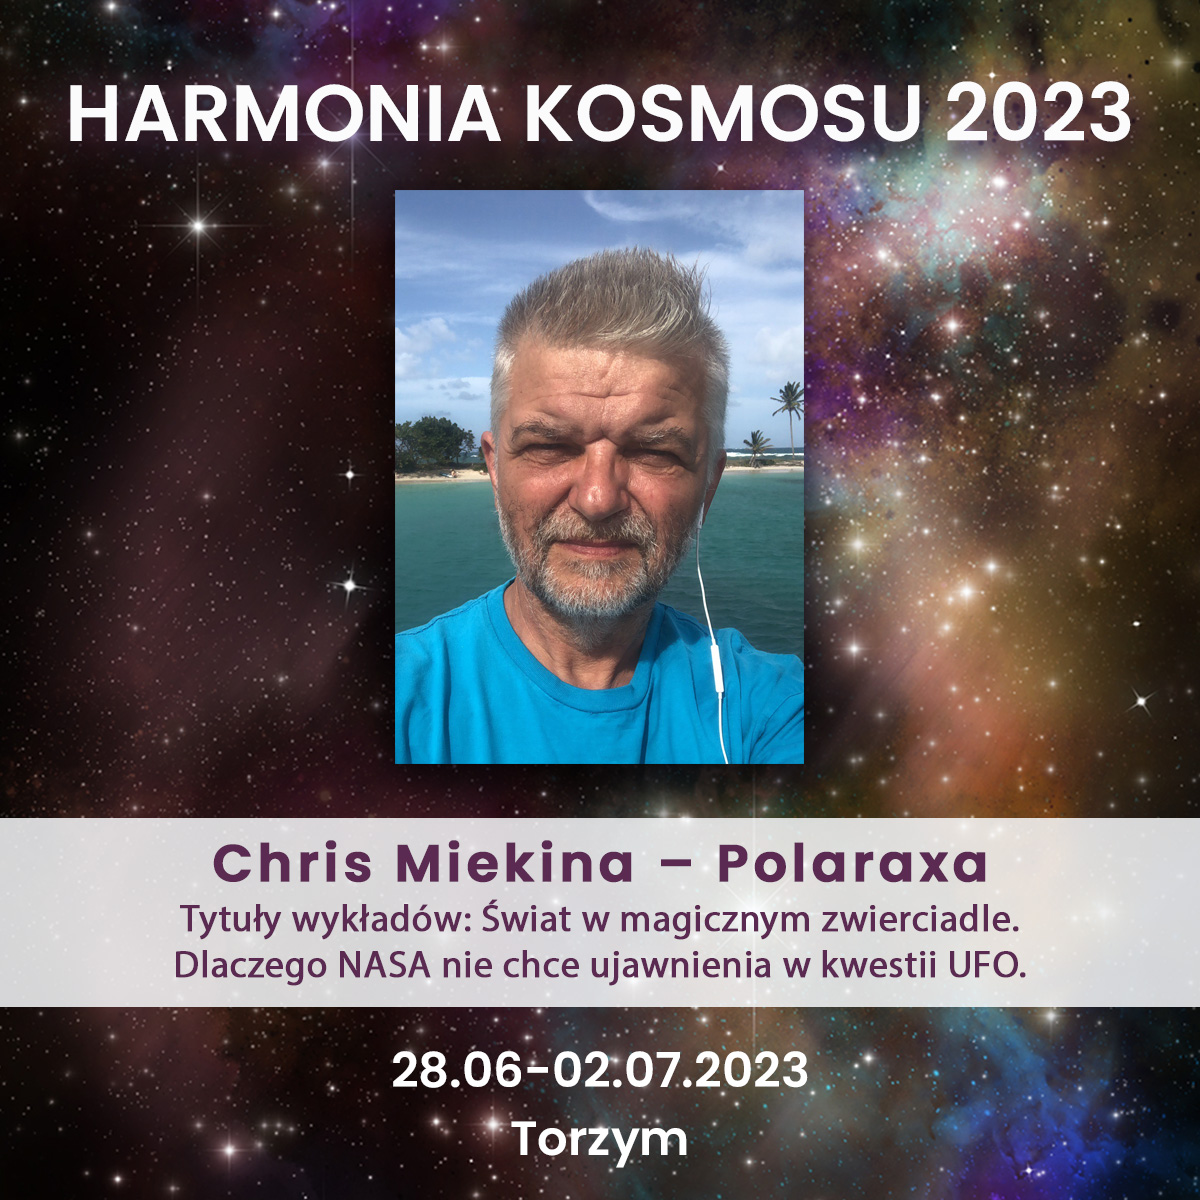 Chris Miekina – Polaraxa